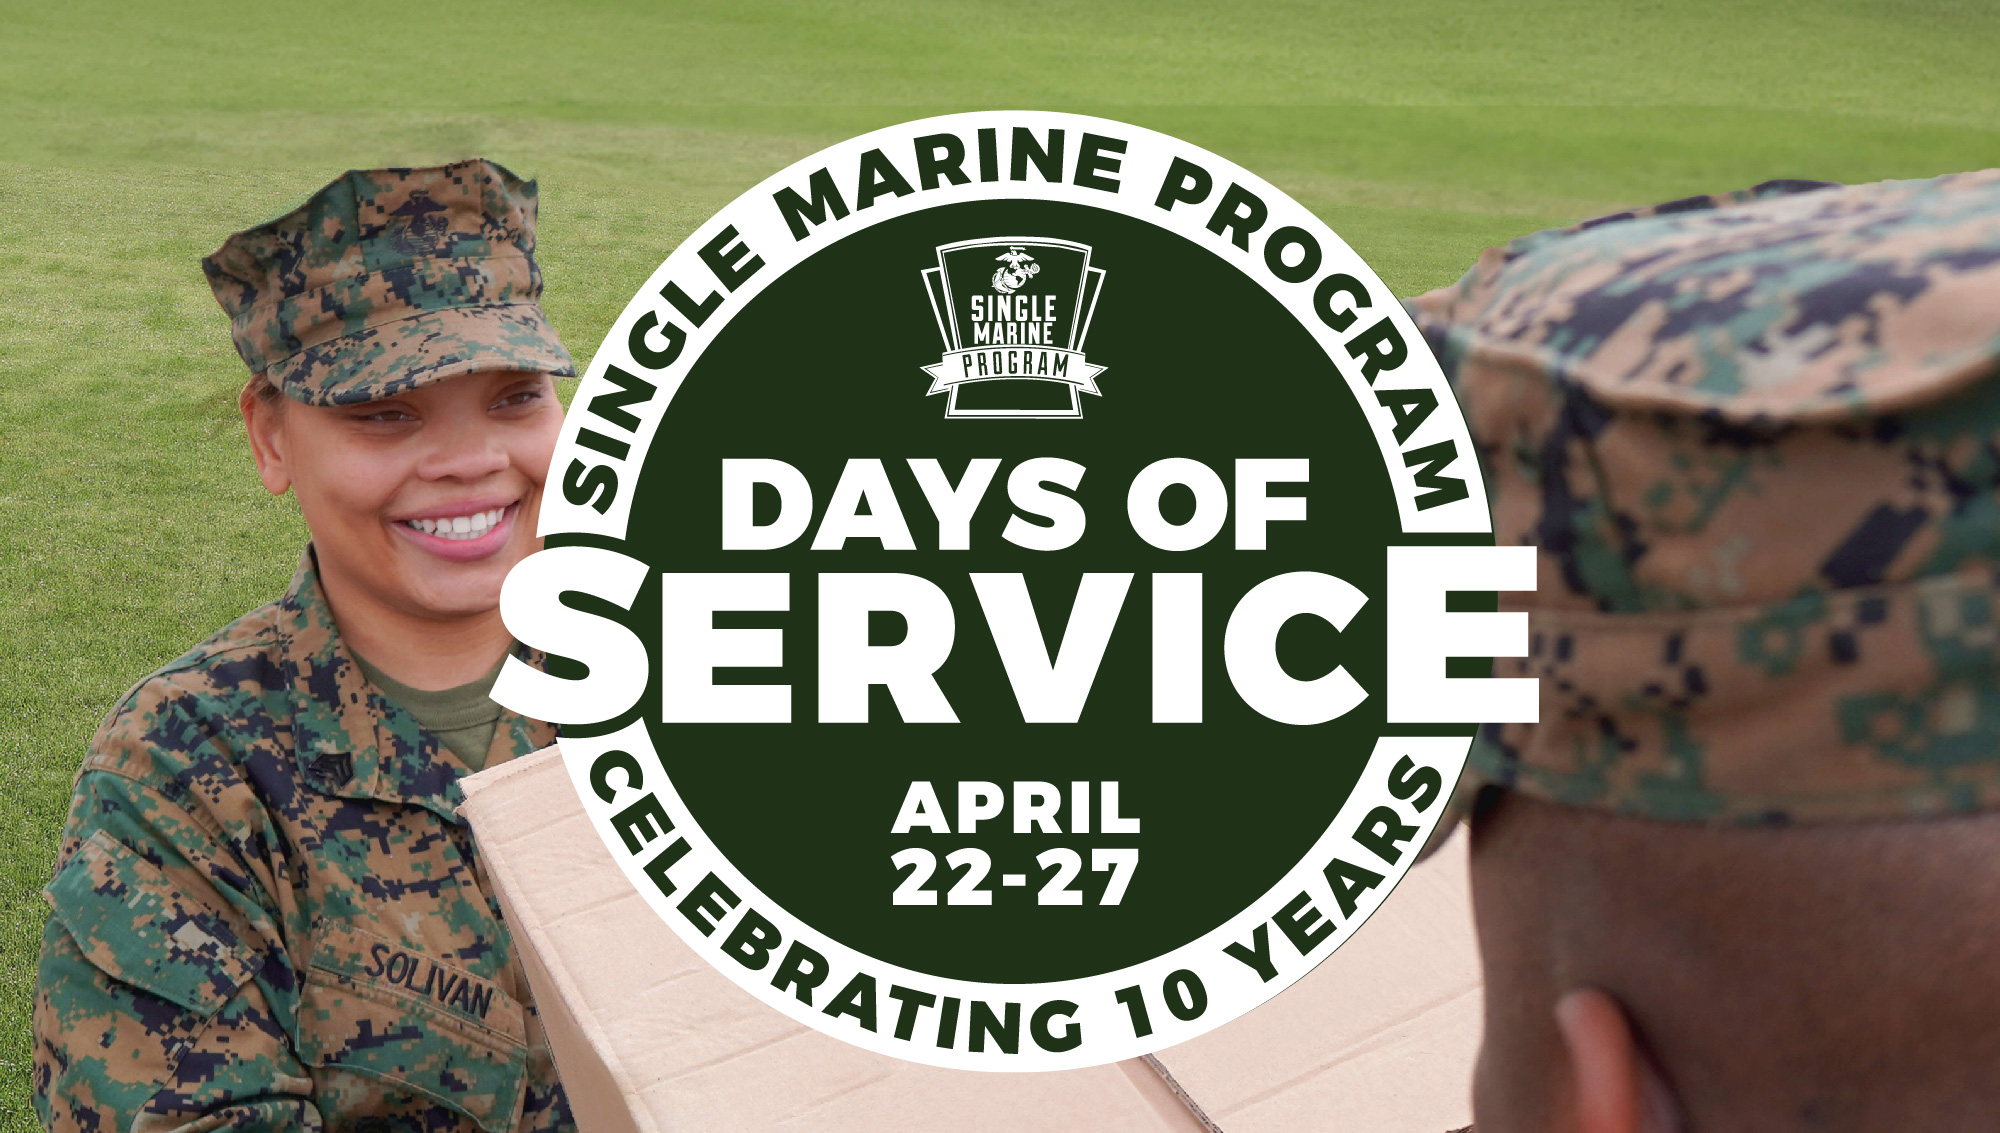 Single Marine Program Days of Service